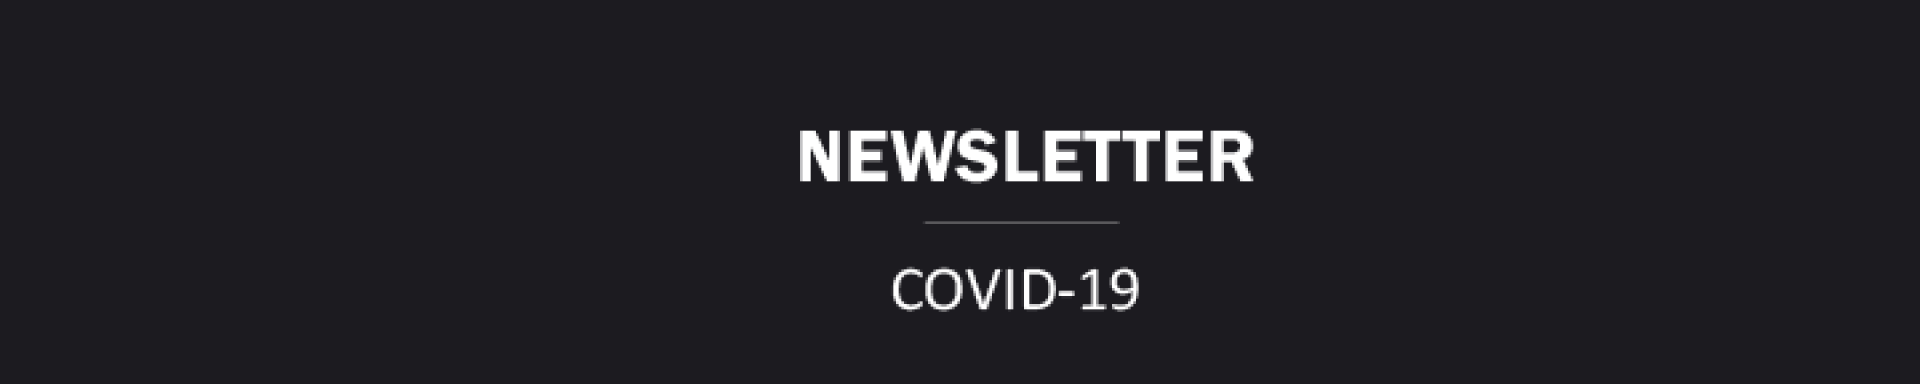 Newsletter COVID-19